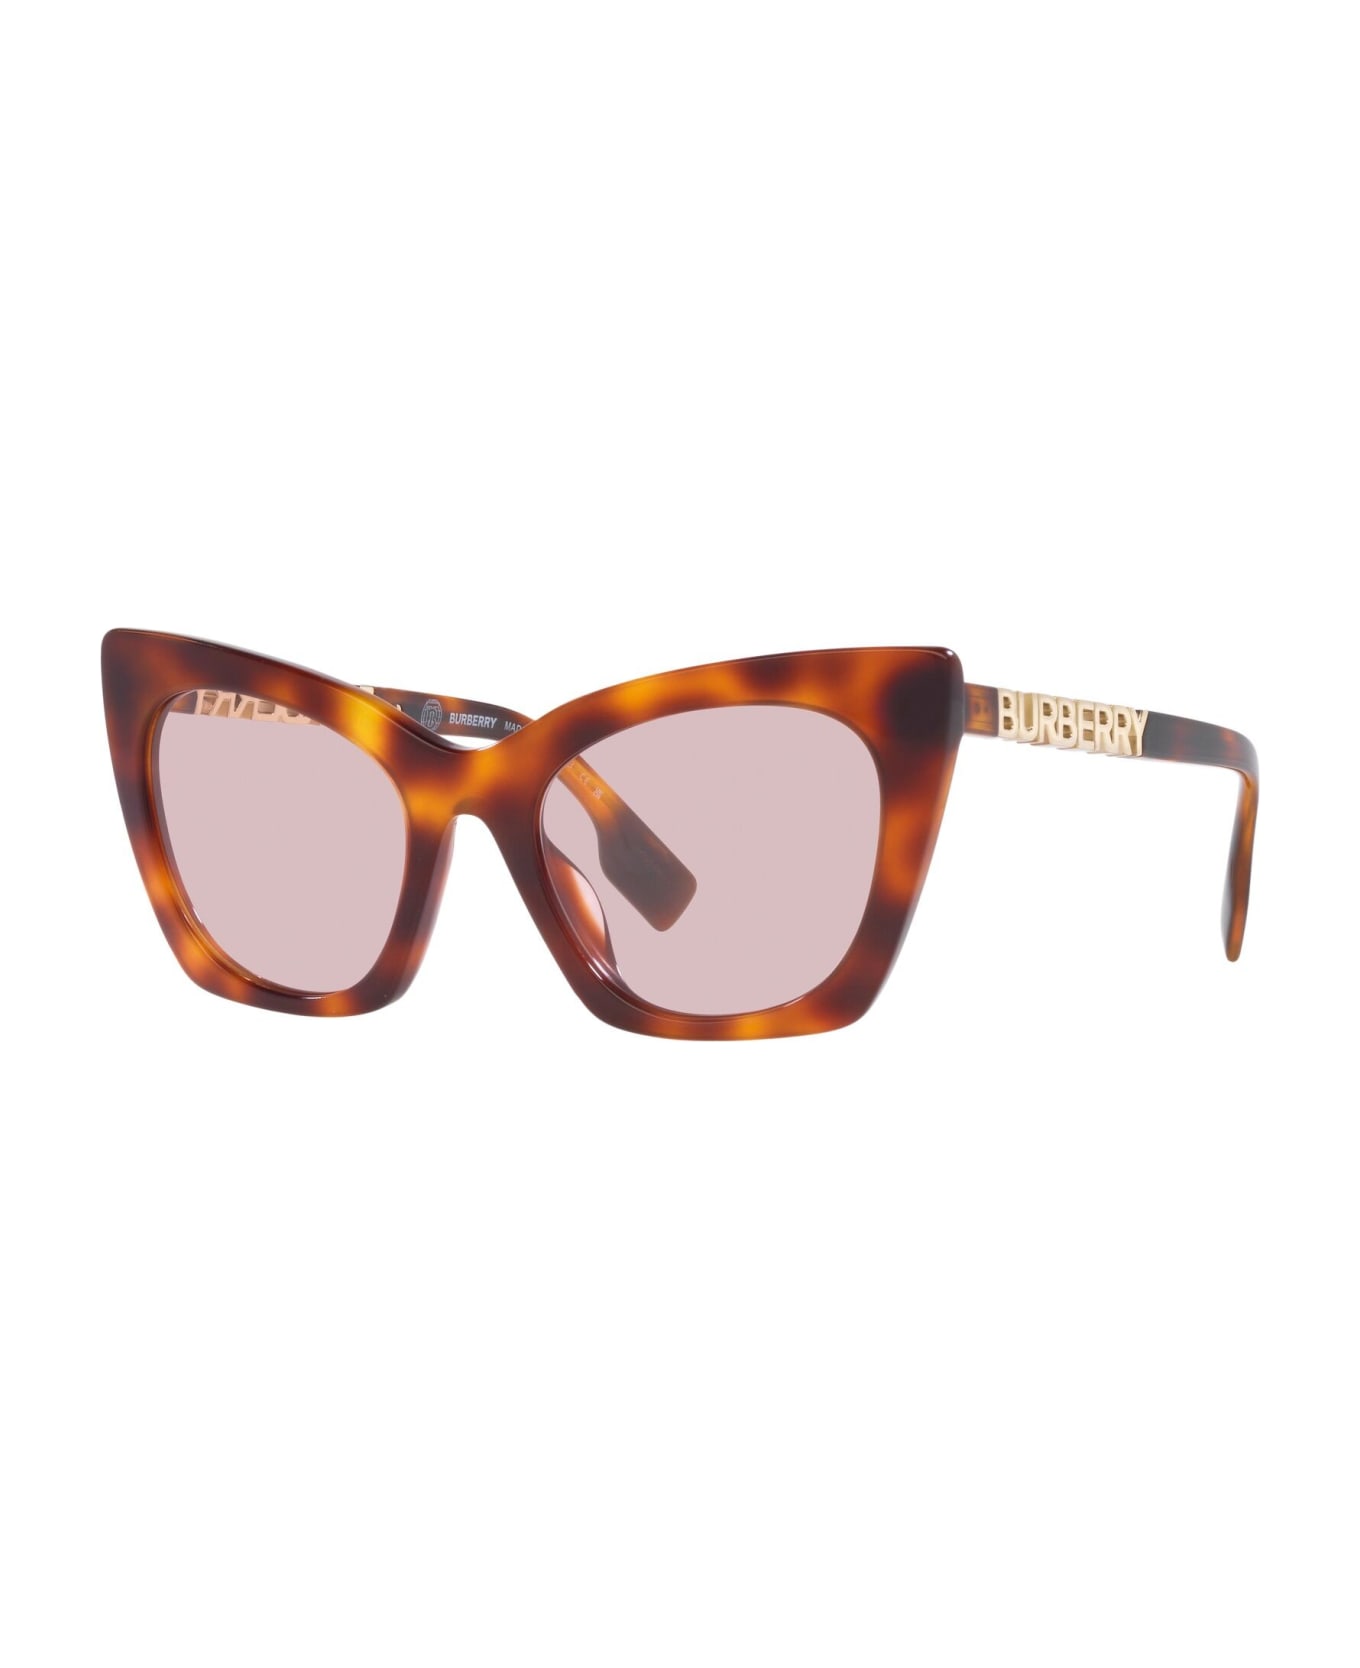 Burberry Eyewear Sunglasses - Marrone  e blu tartarugato/Marrone